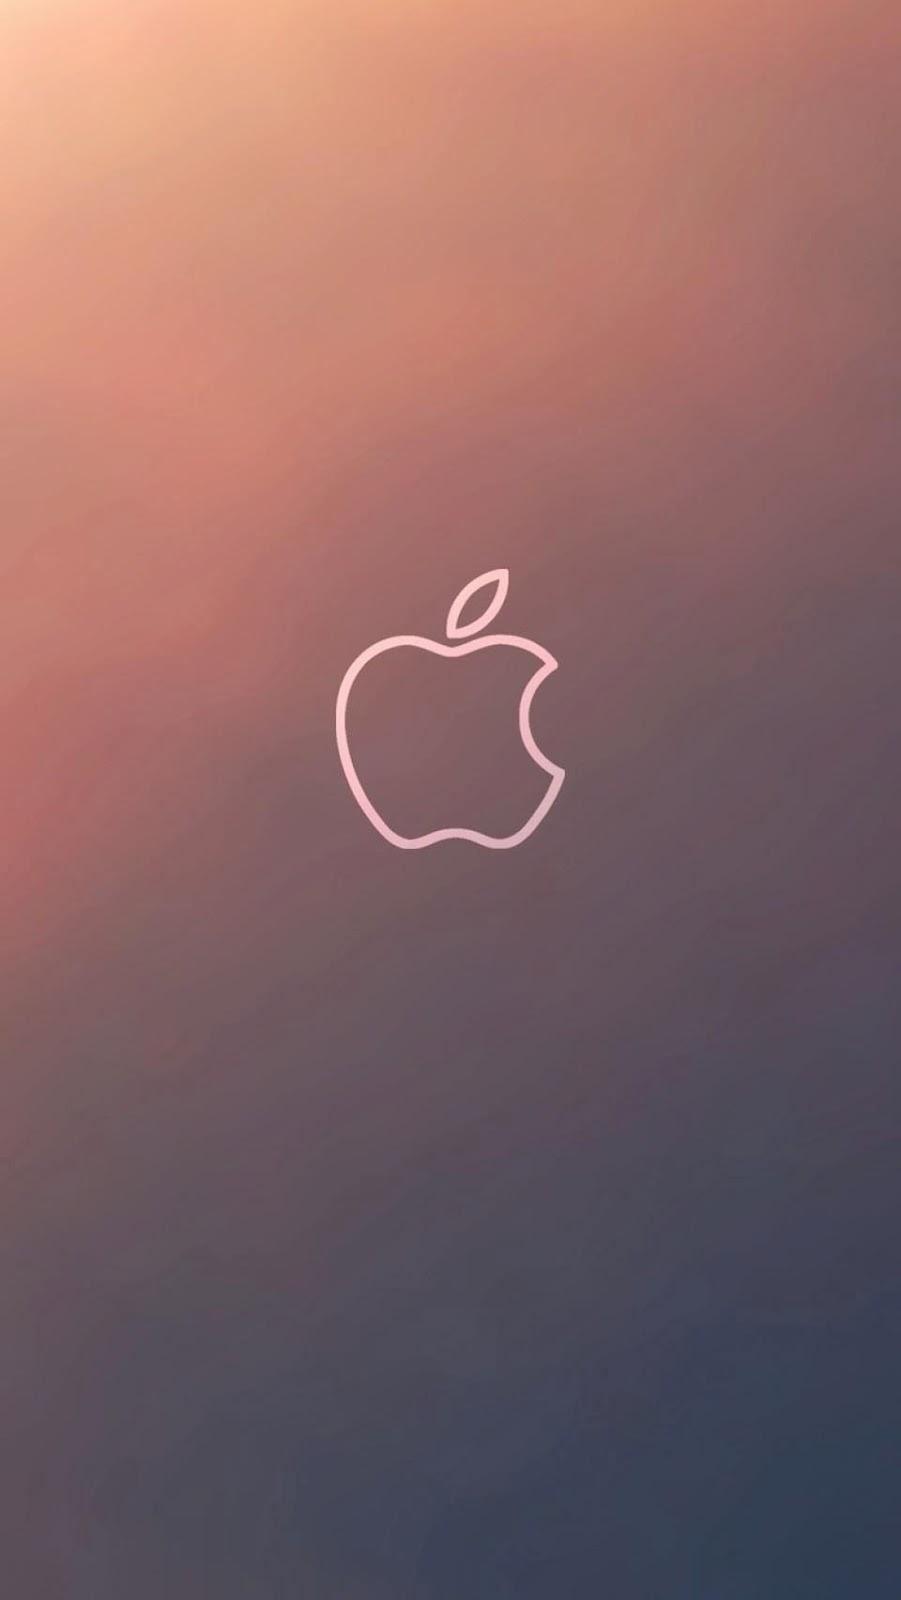 iPhone 6 6 Plus Wallpaper   Apple Logo   Covers Heat 901x1600